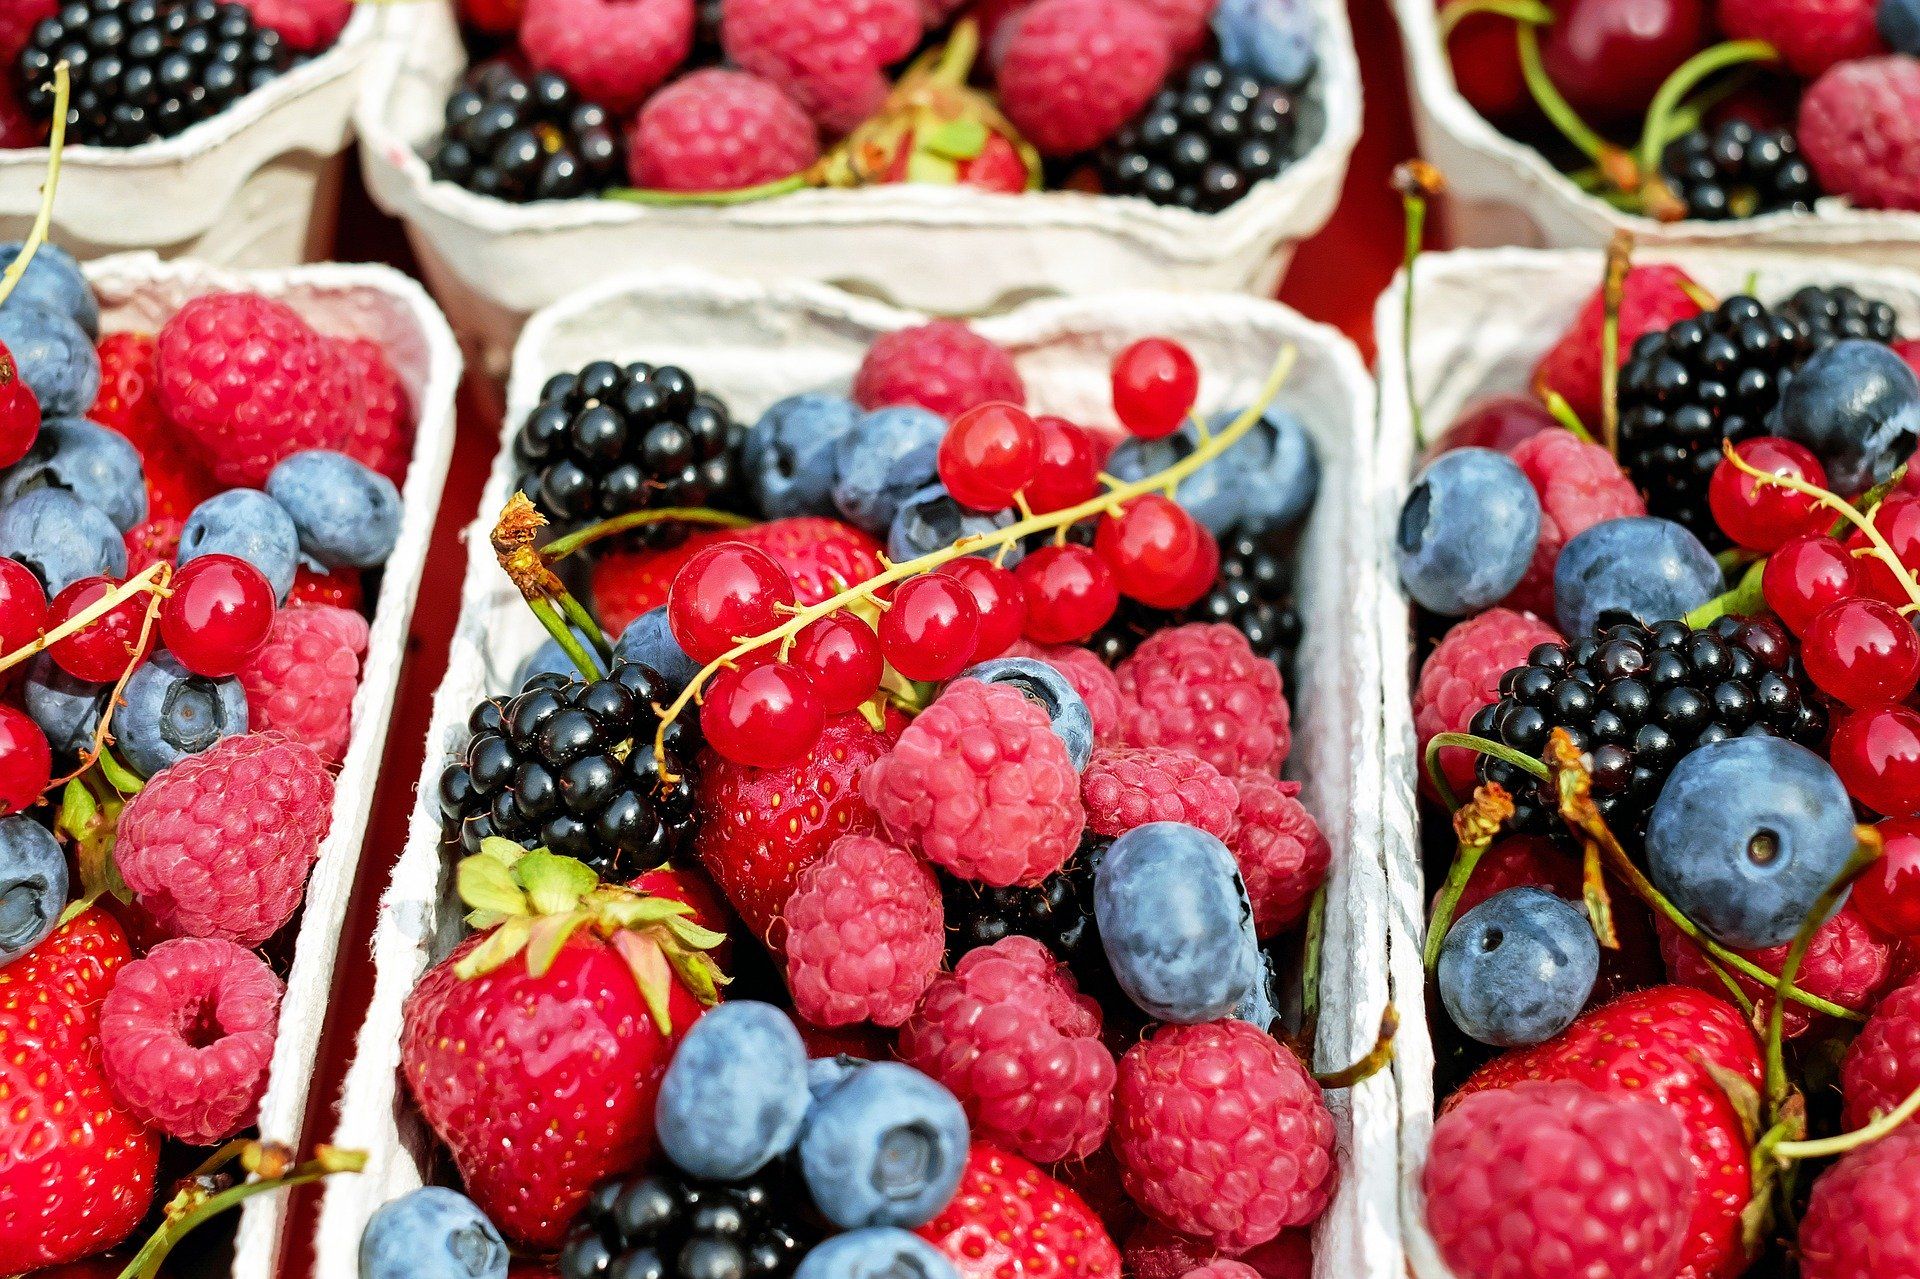 Jenis buah berry adalah pilihan terbaik untuk menurunkan kadar gula darah.*/